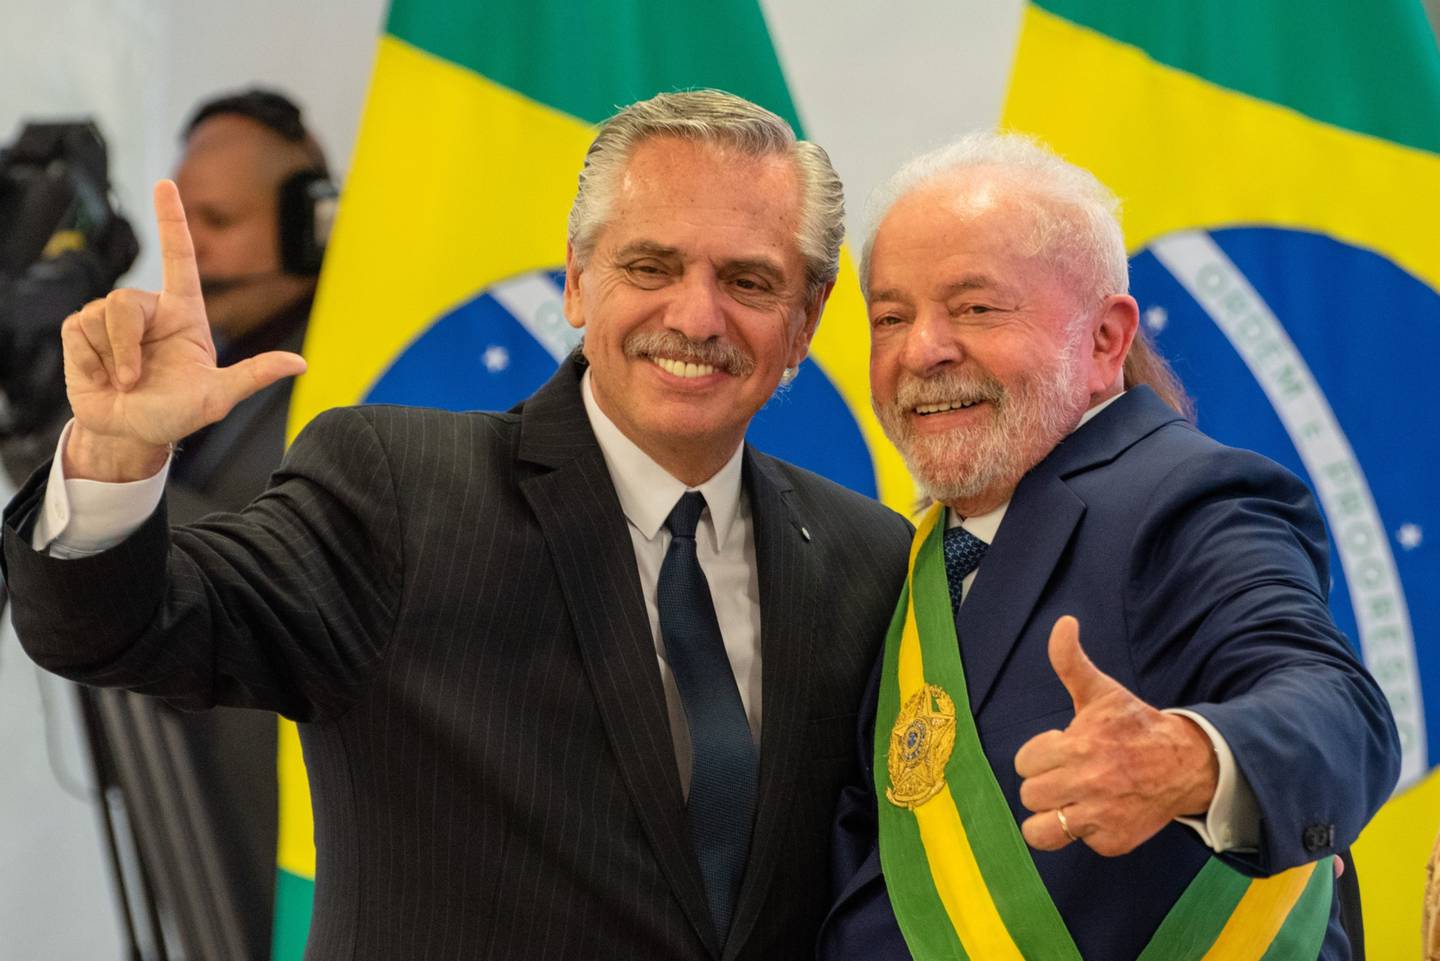 Luiz Inacio Lula da Silva, Brazil's president, right, meets Alberto Fernandez, Argentina's president, after being sworn-in during an inauguration ceremony in Brasilia.